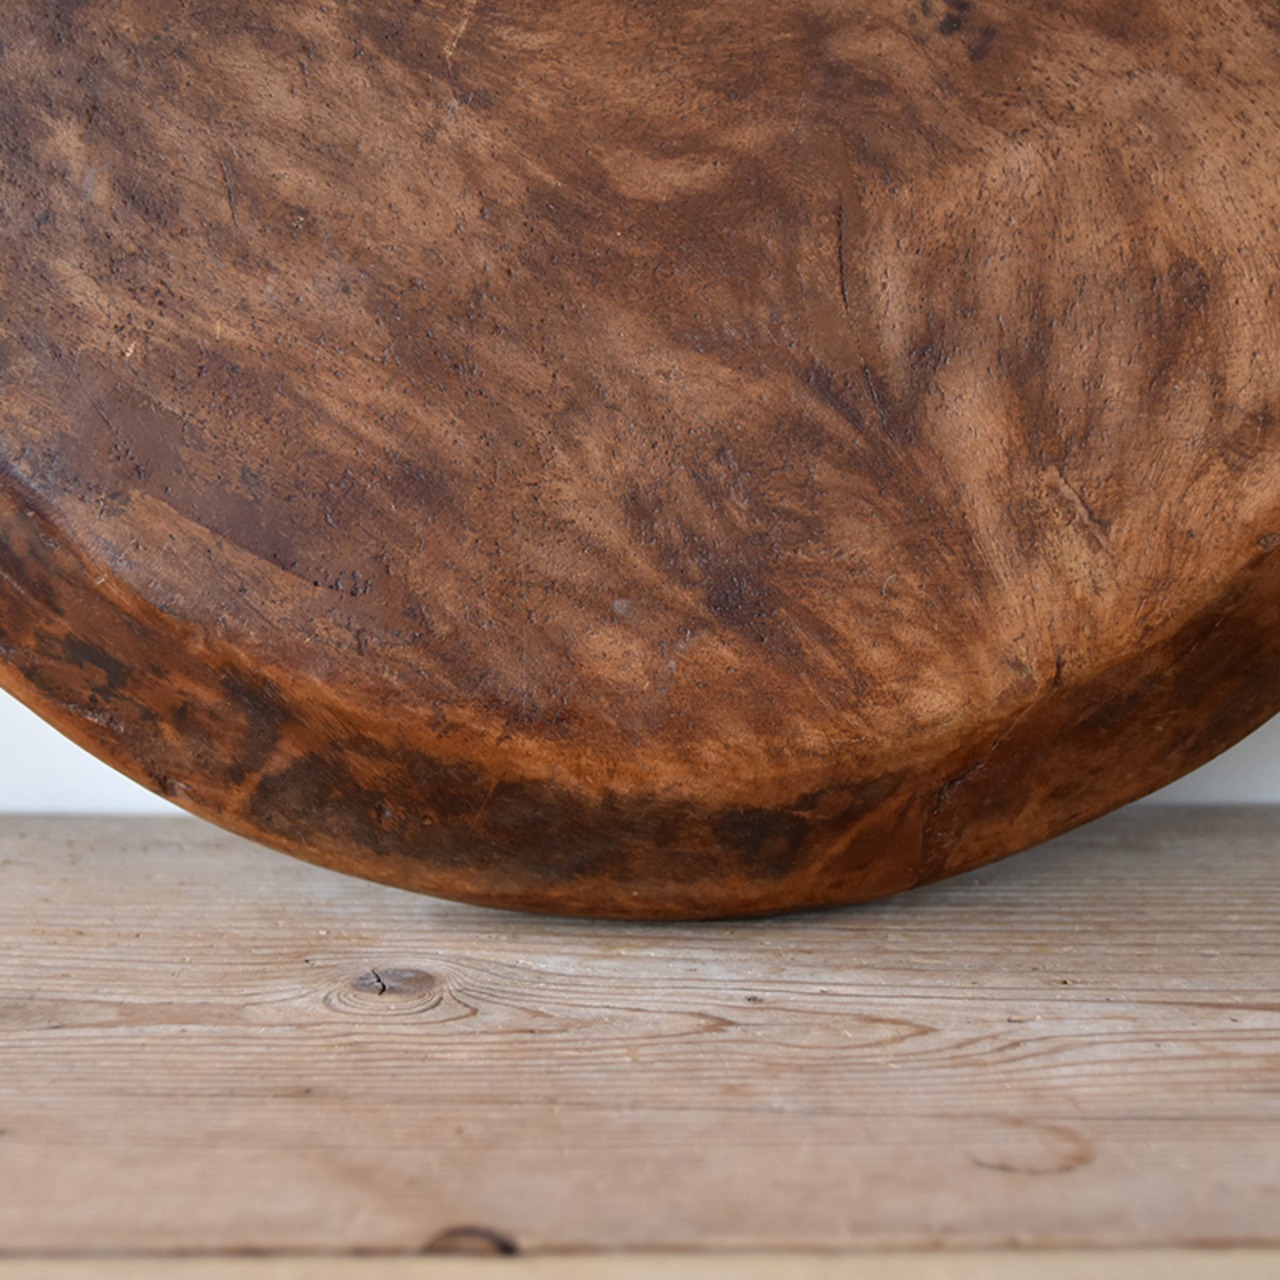 African Vintage Ethnic Wooden Bowl【B】 / アフリカン ヴィンテージ ウッドボウル / DRS-005B